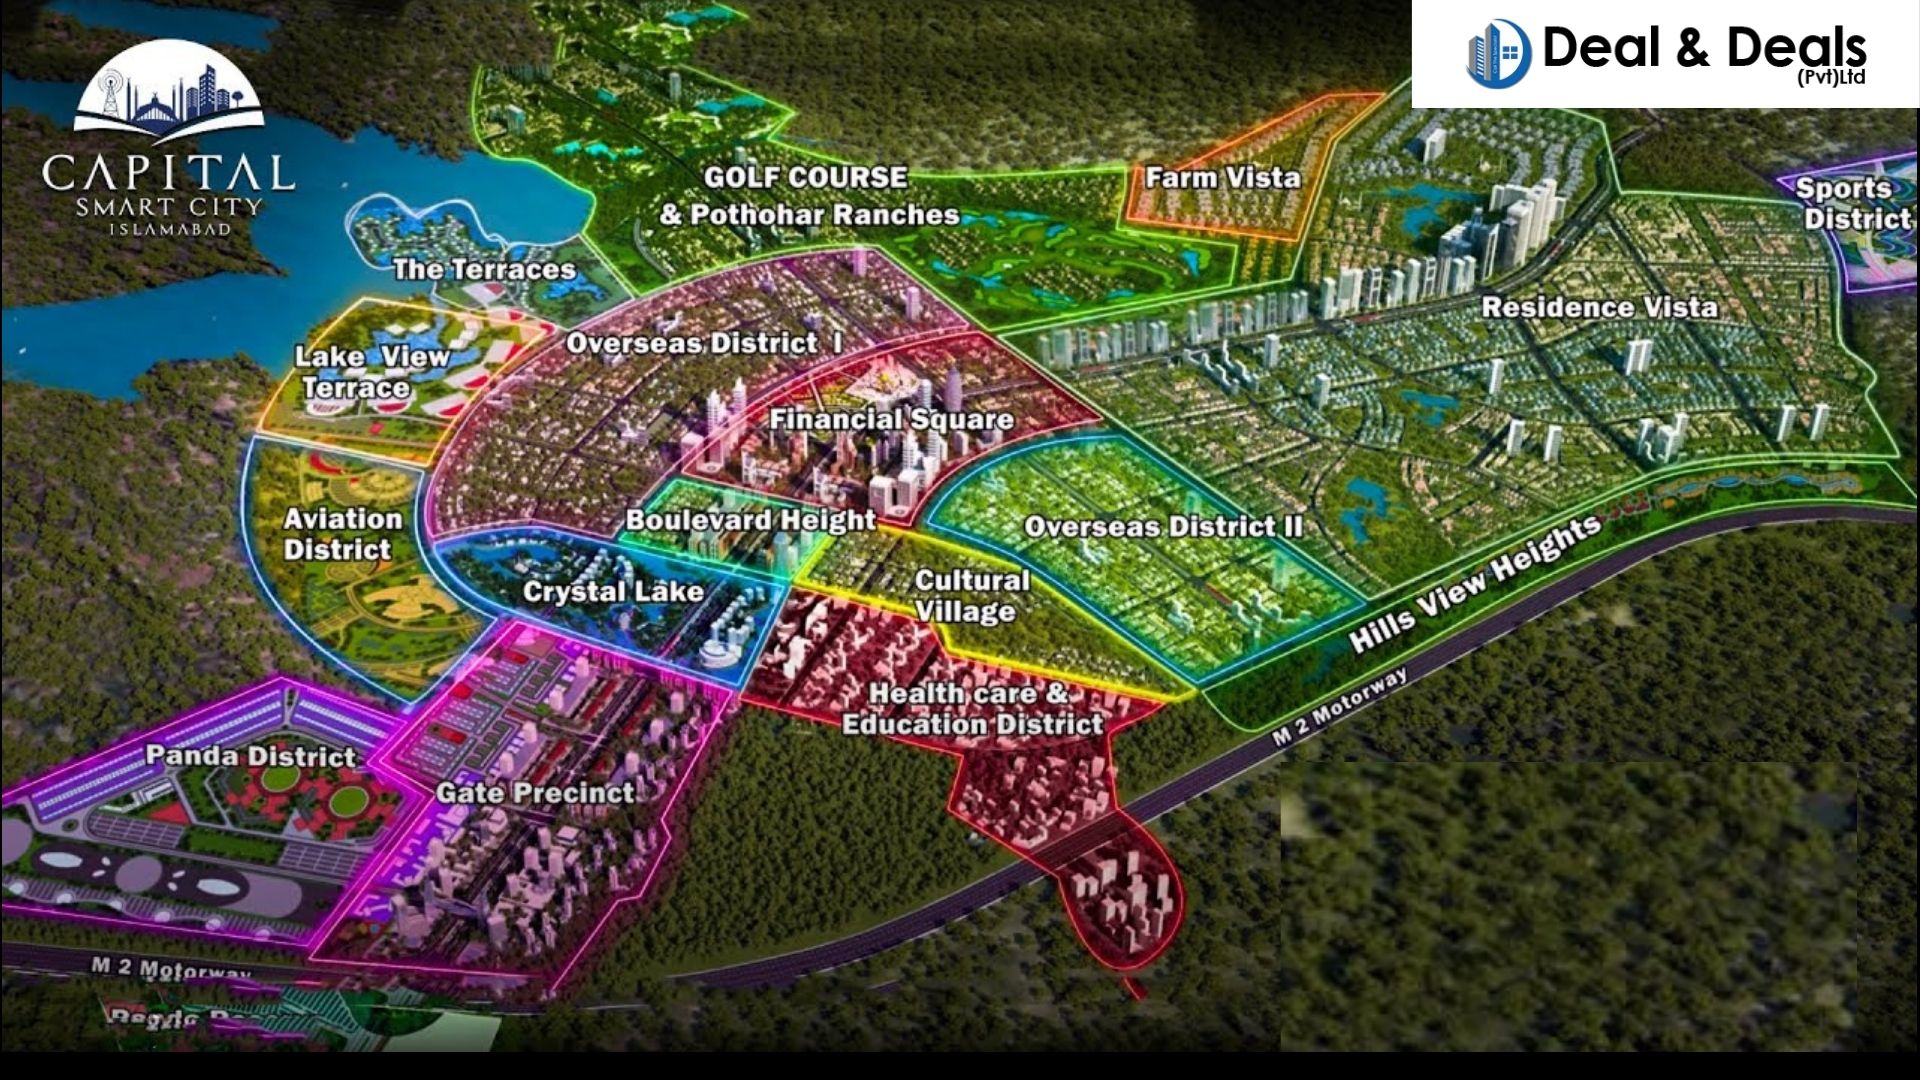 Islamabad Capital Smart City masterplan